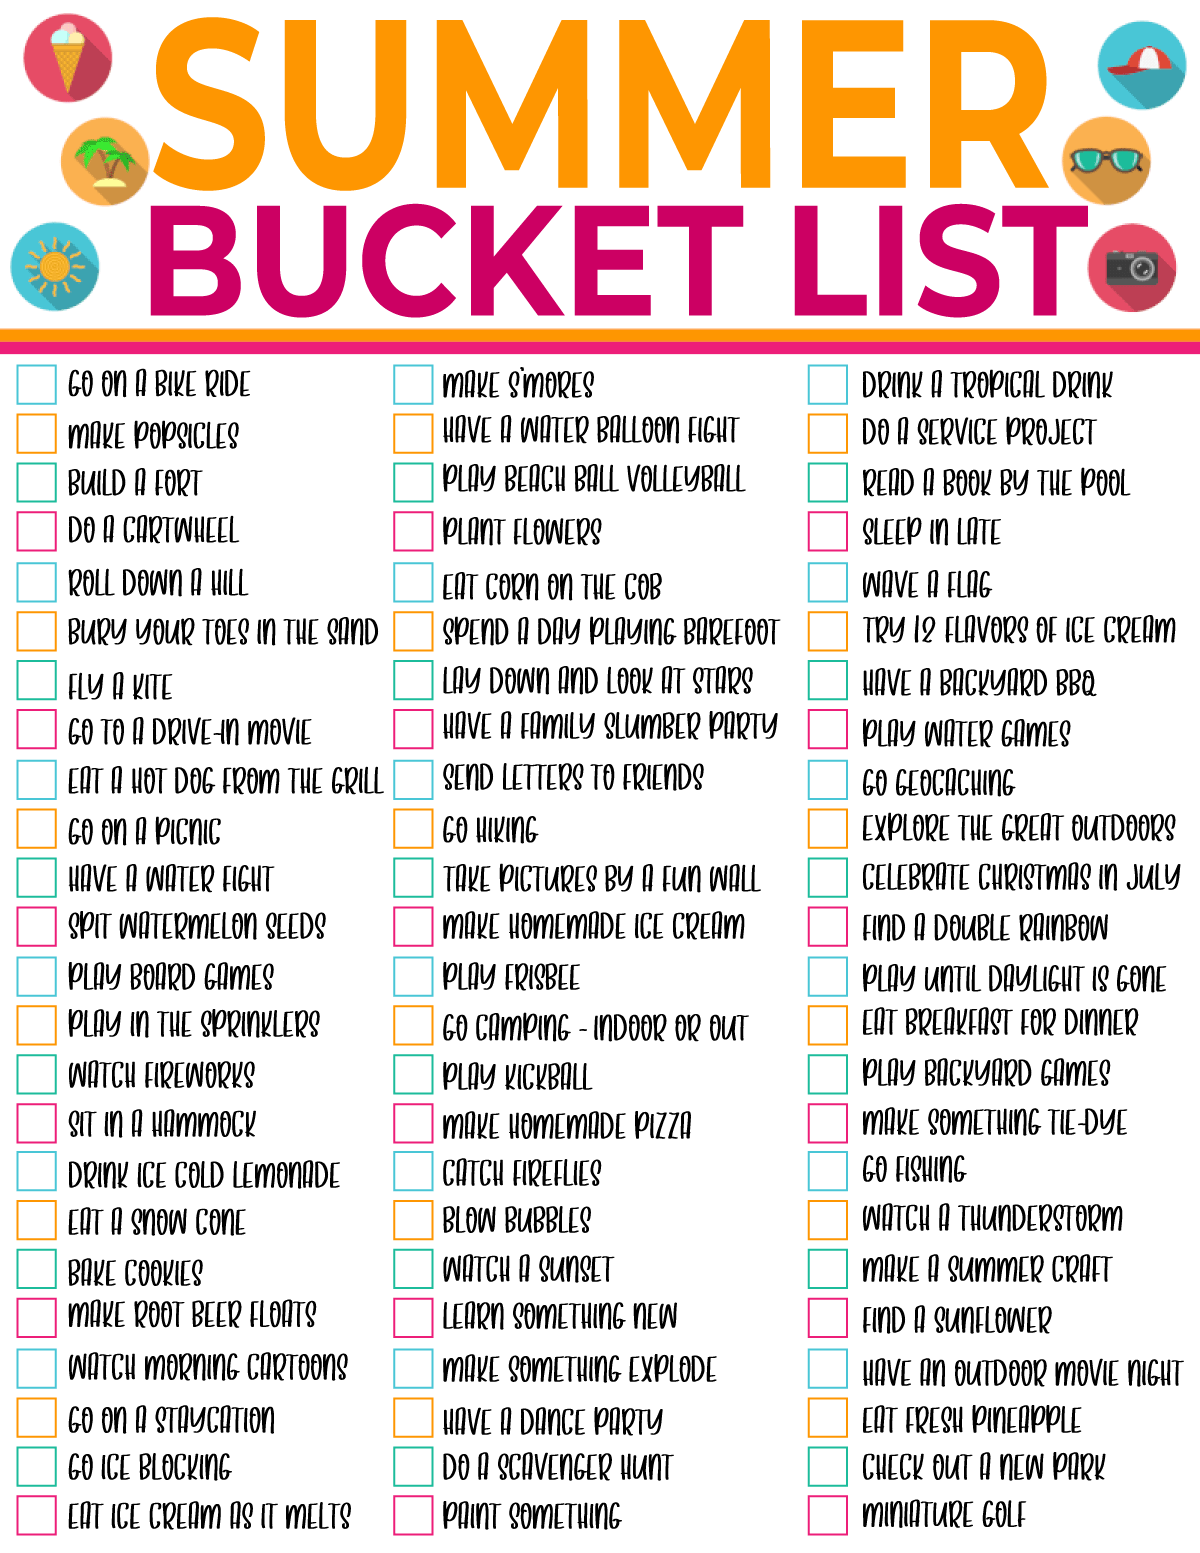 List of 2020 summer bucket list ideas